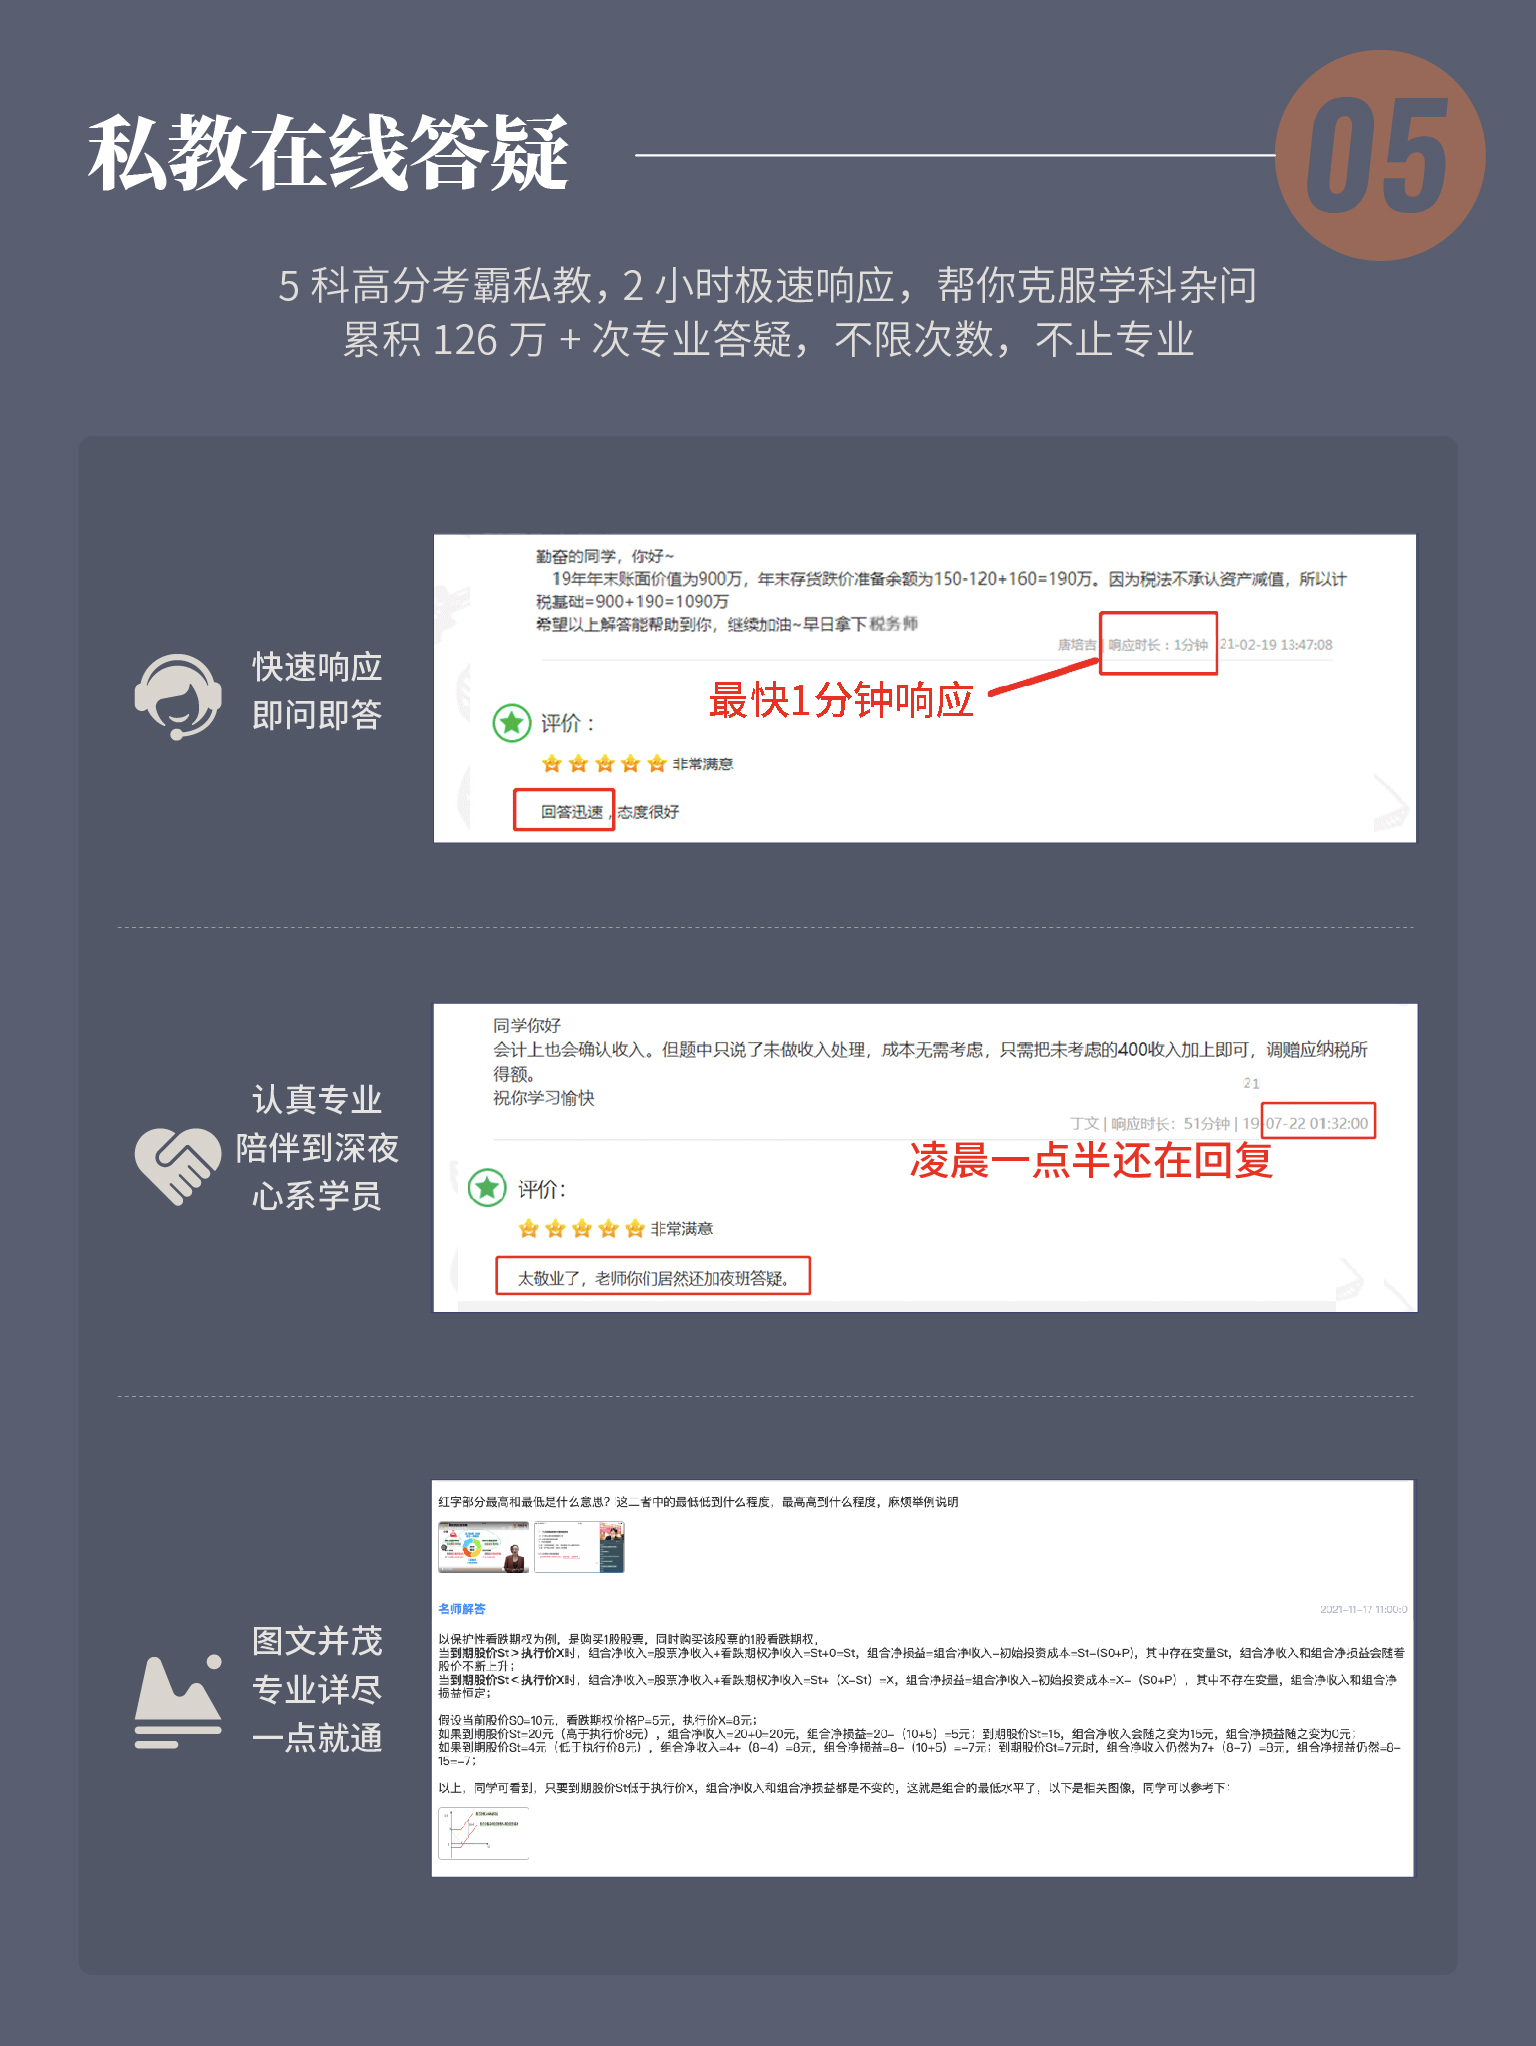 https://simg01.gaodunwangxiao.com/uploadfiles/product-center/202210/28/5ffc3_20221028172206.jpg